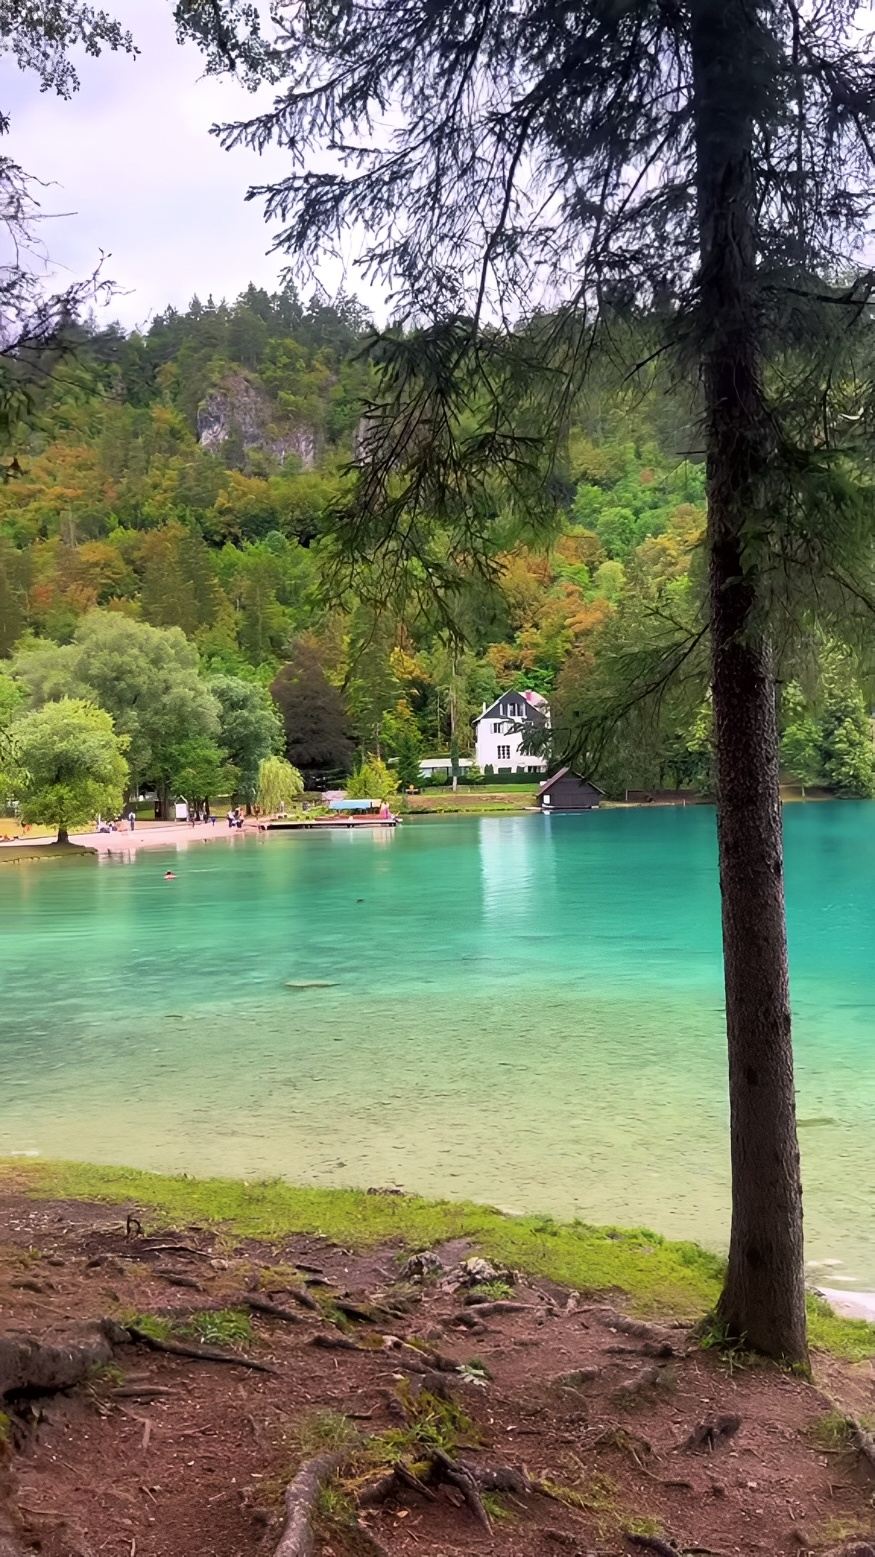 📍Lake Bled, Slovenia 🇸🇮